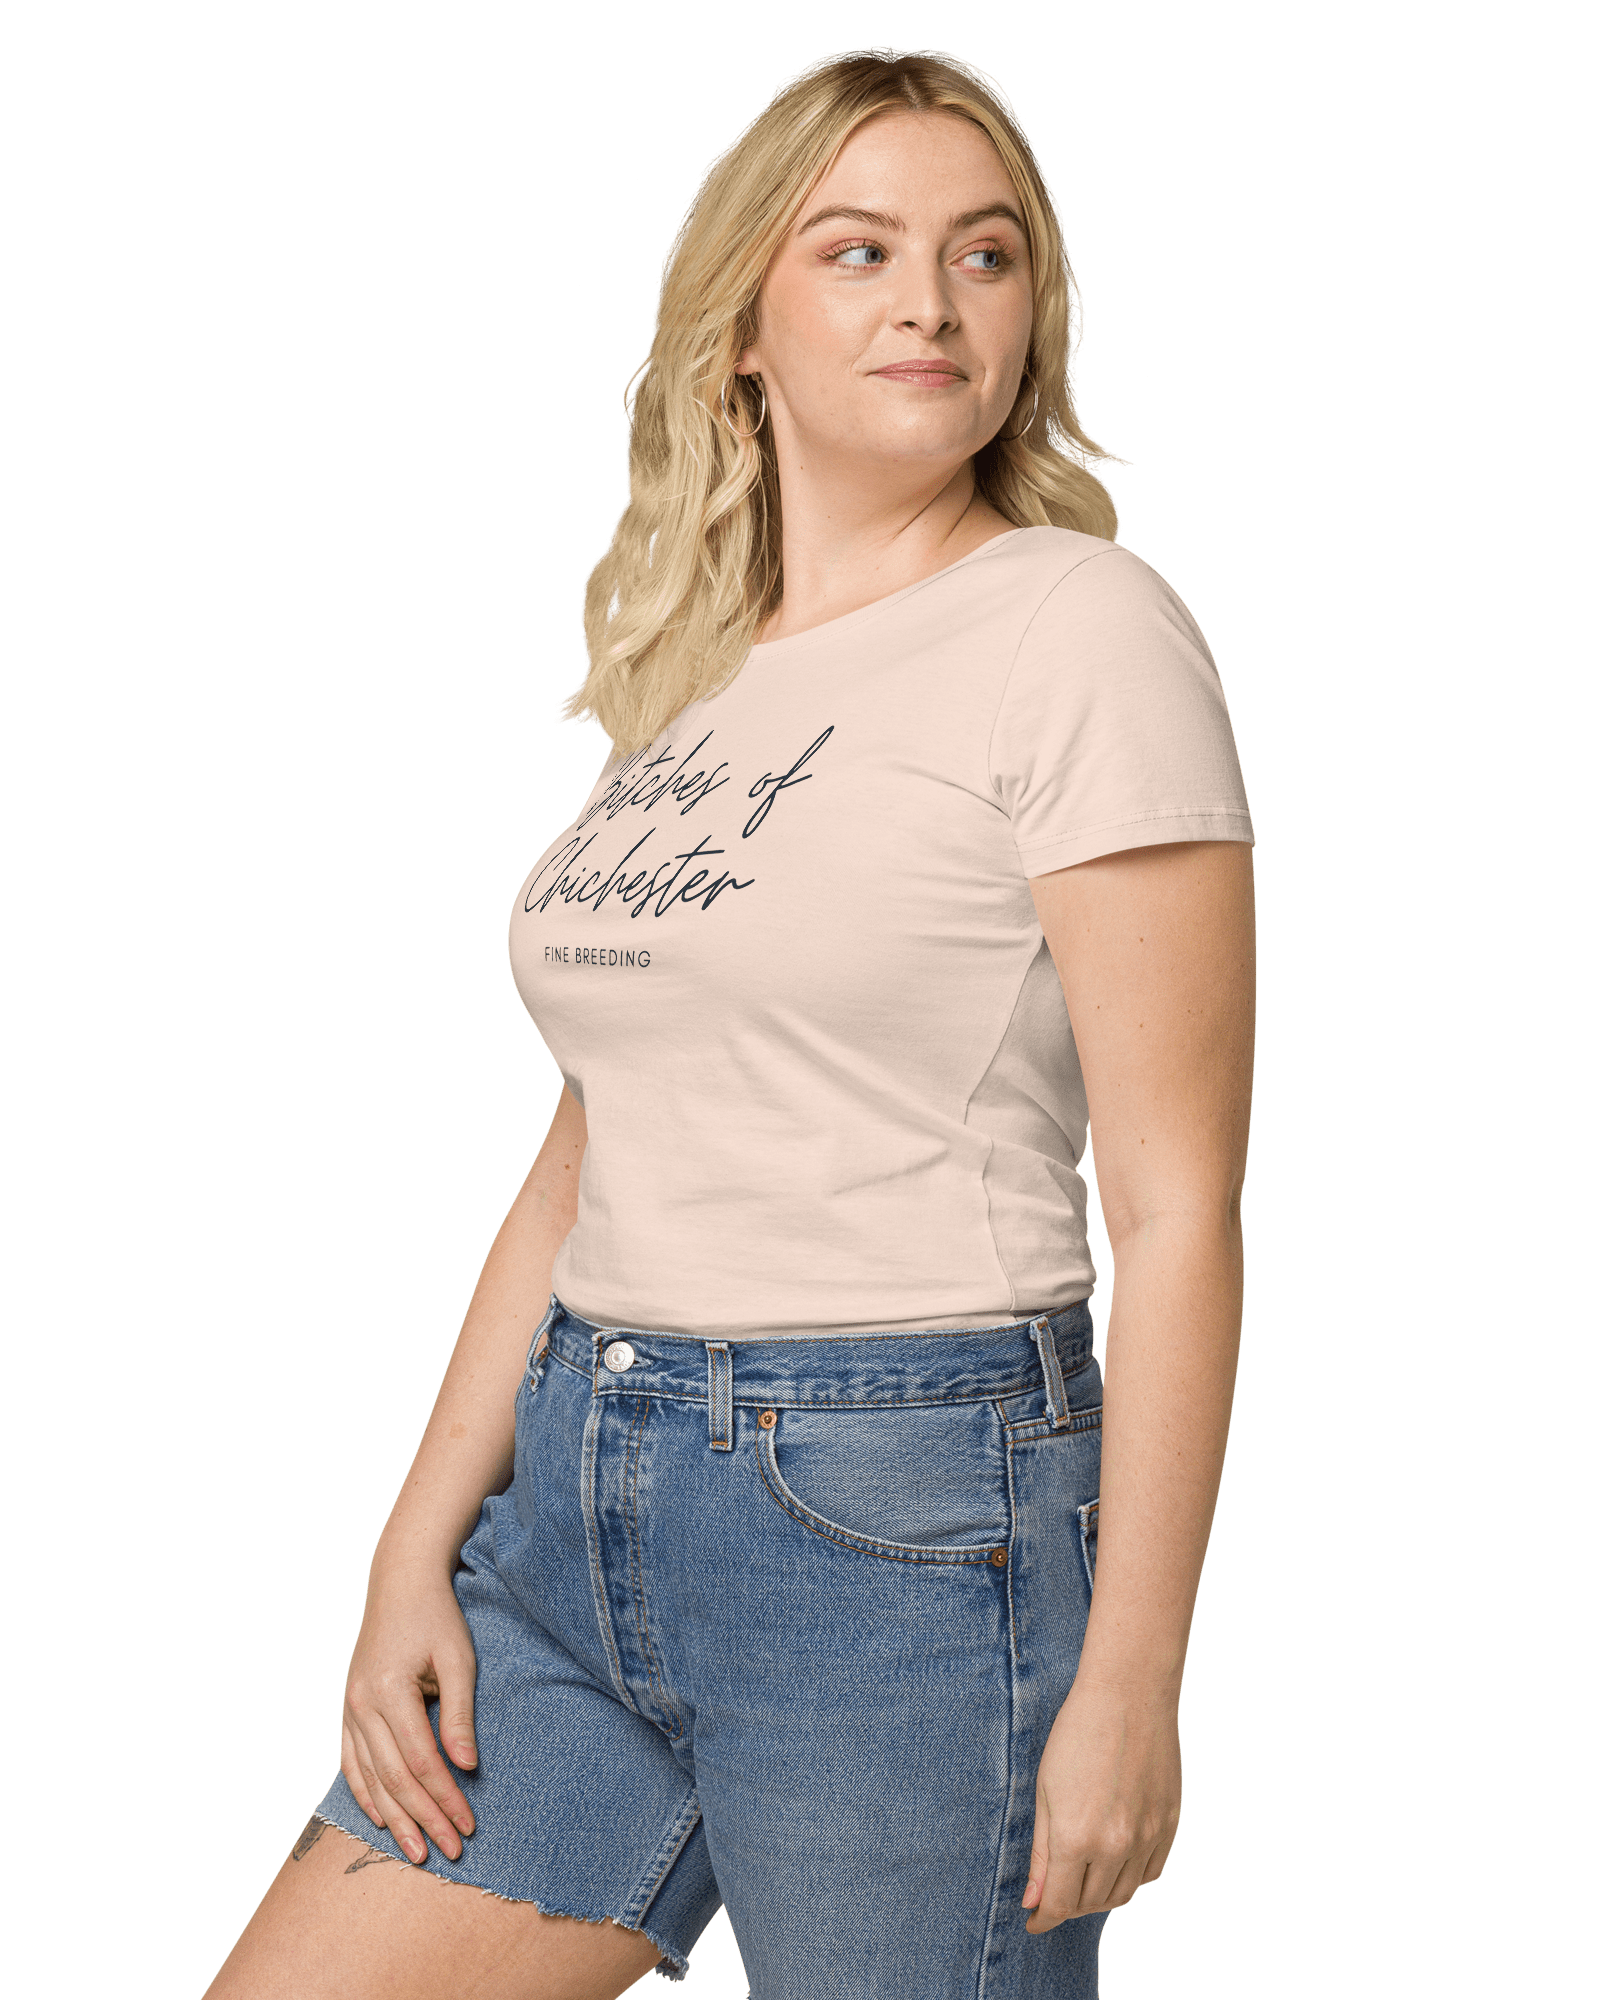 Bitches of Chichester | Women’s Organic T-shirt Creamy pink / S Shirts & Tops Jolly & Goode